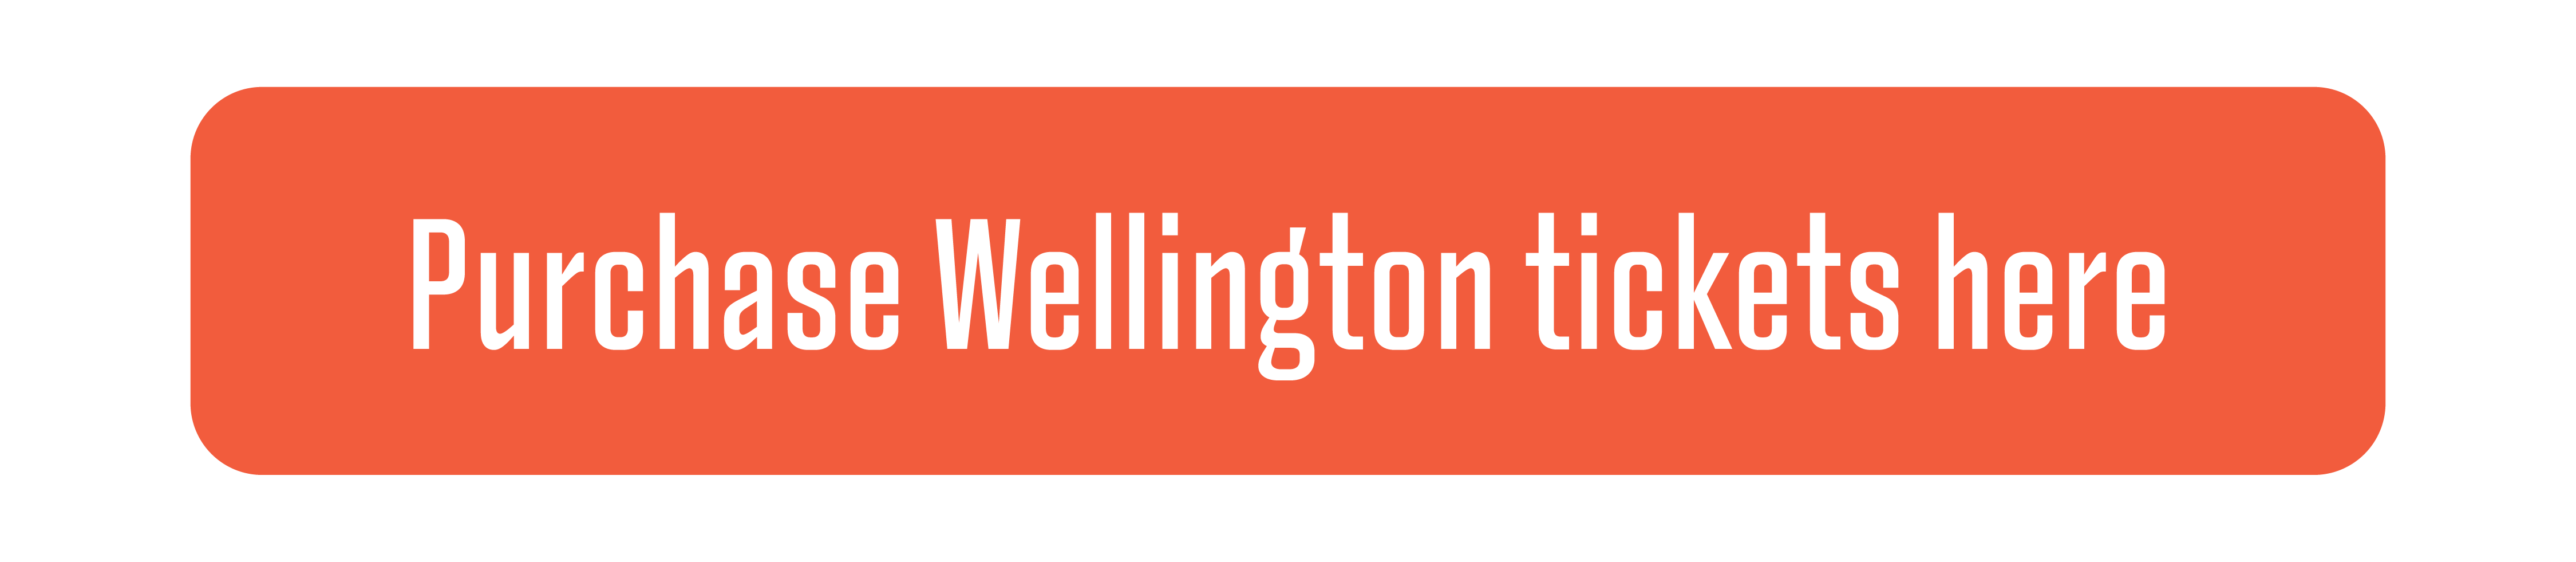 Wellington ticket button.png